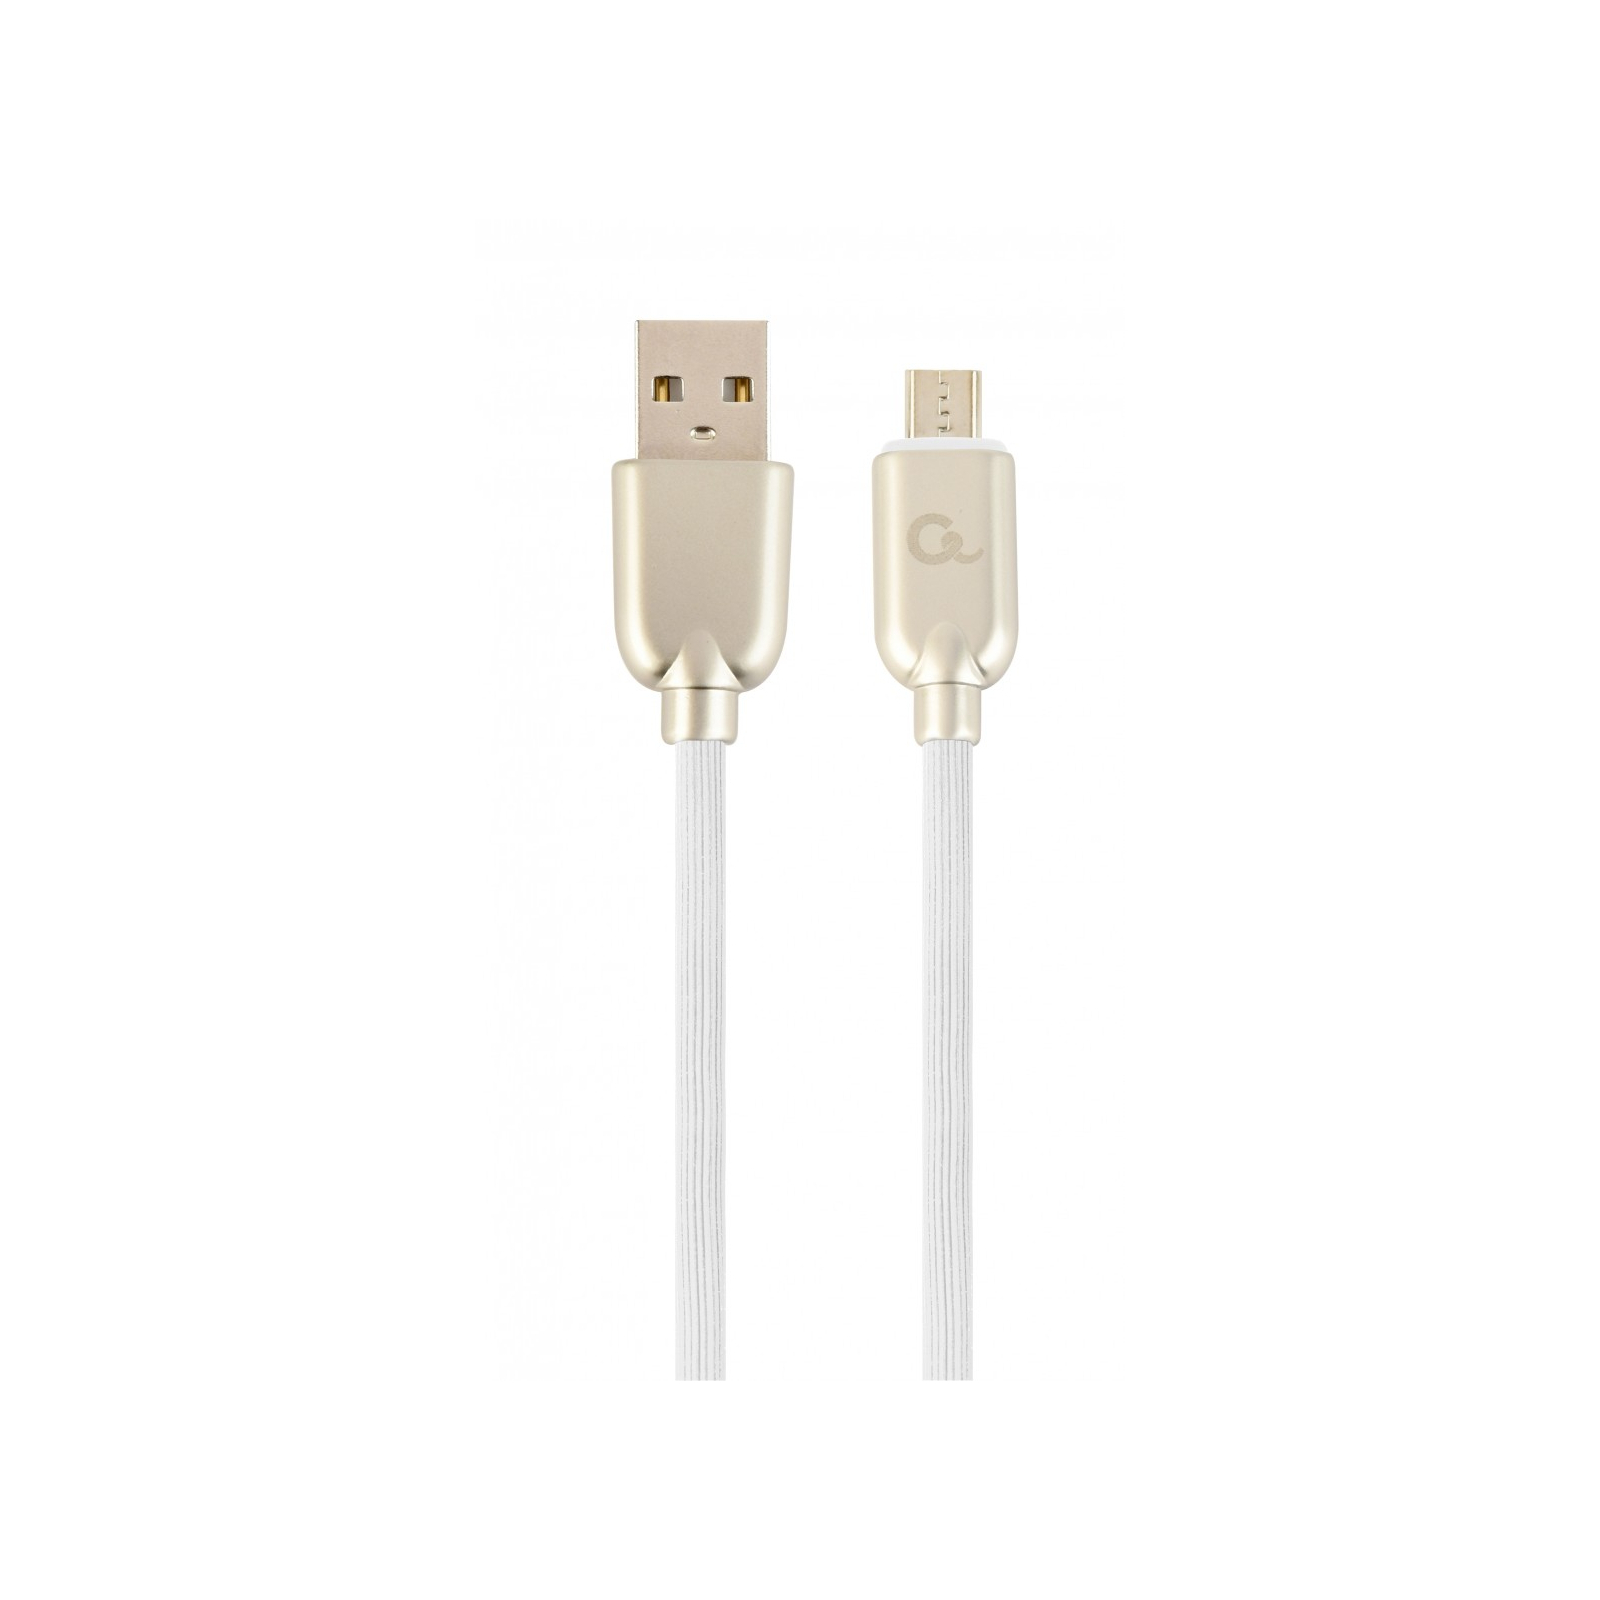 Дата кабель USB 2.0 Micro 5P to AM Cablexpert (CC-USB2R-AMmBM-2M-R)